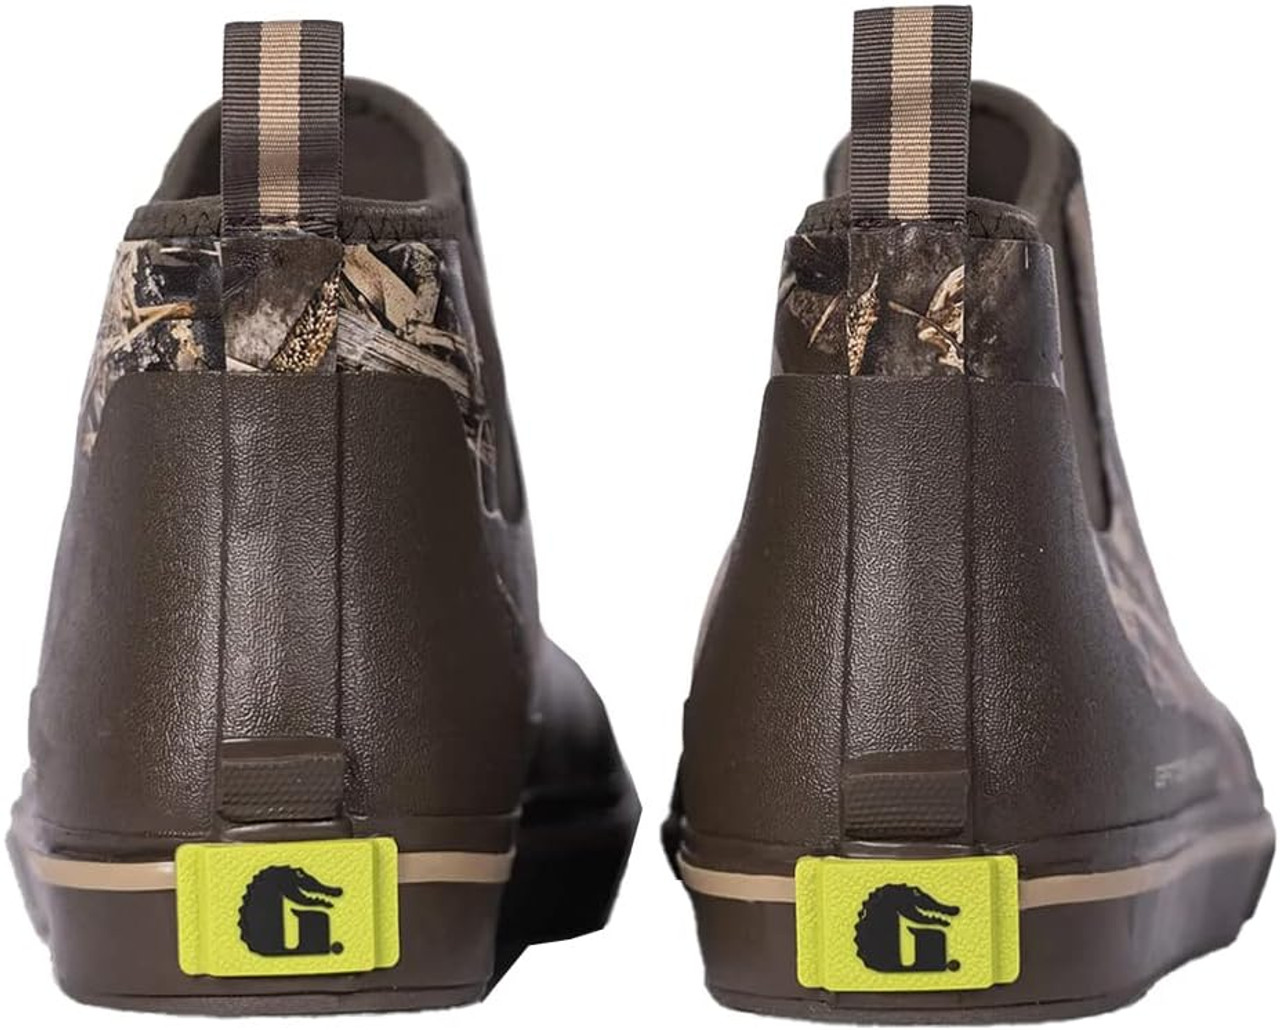 Gator Waders Men Camp Boots Light & Comfortable - Max 7 - Regular Size 10